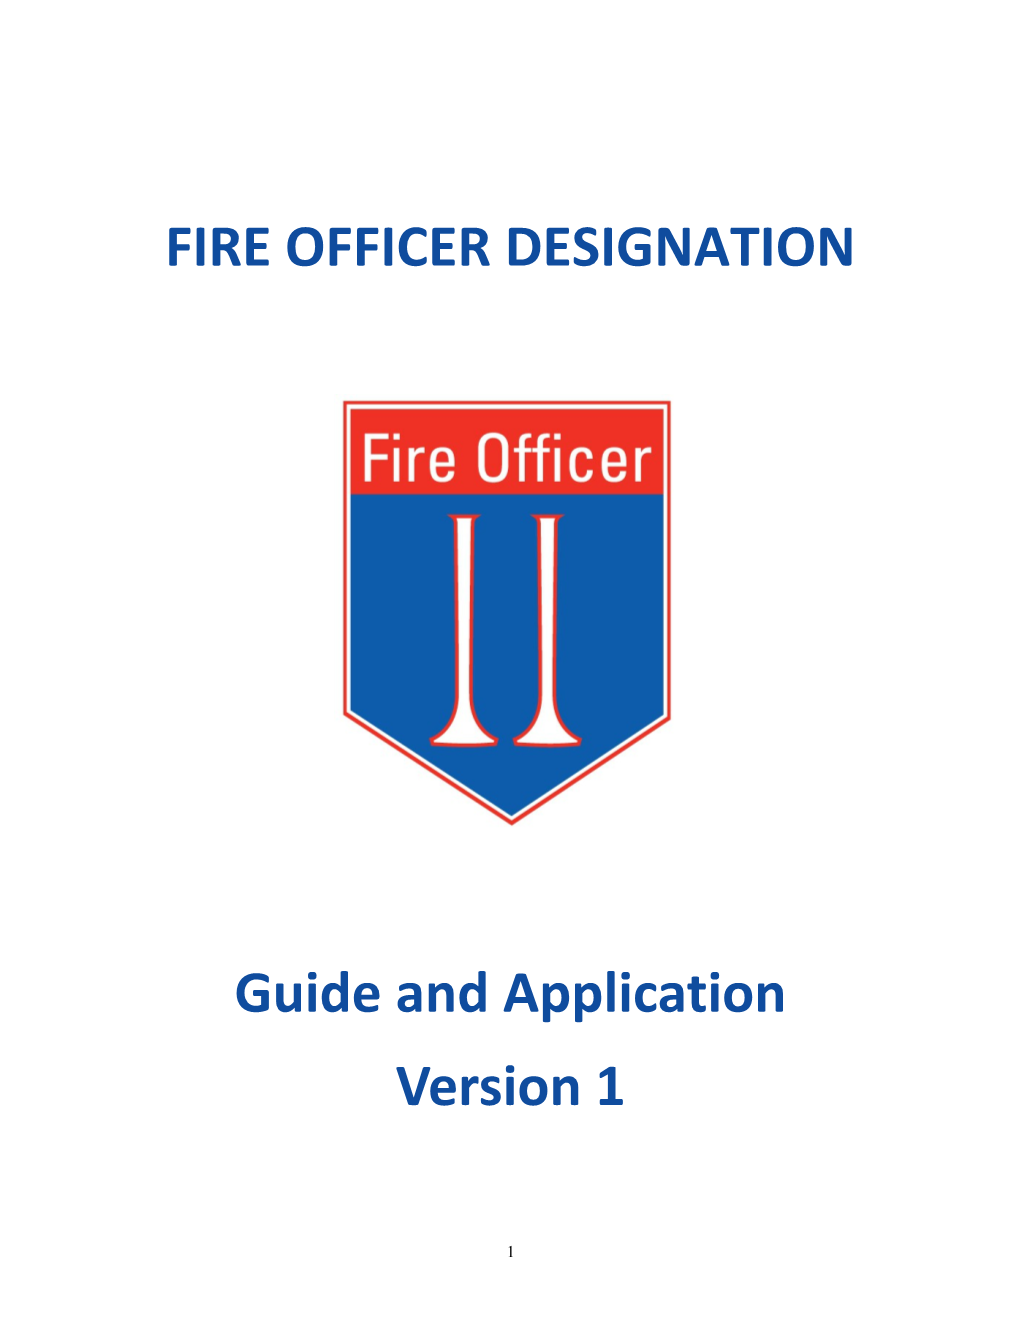 Fire Officer Designation